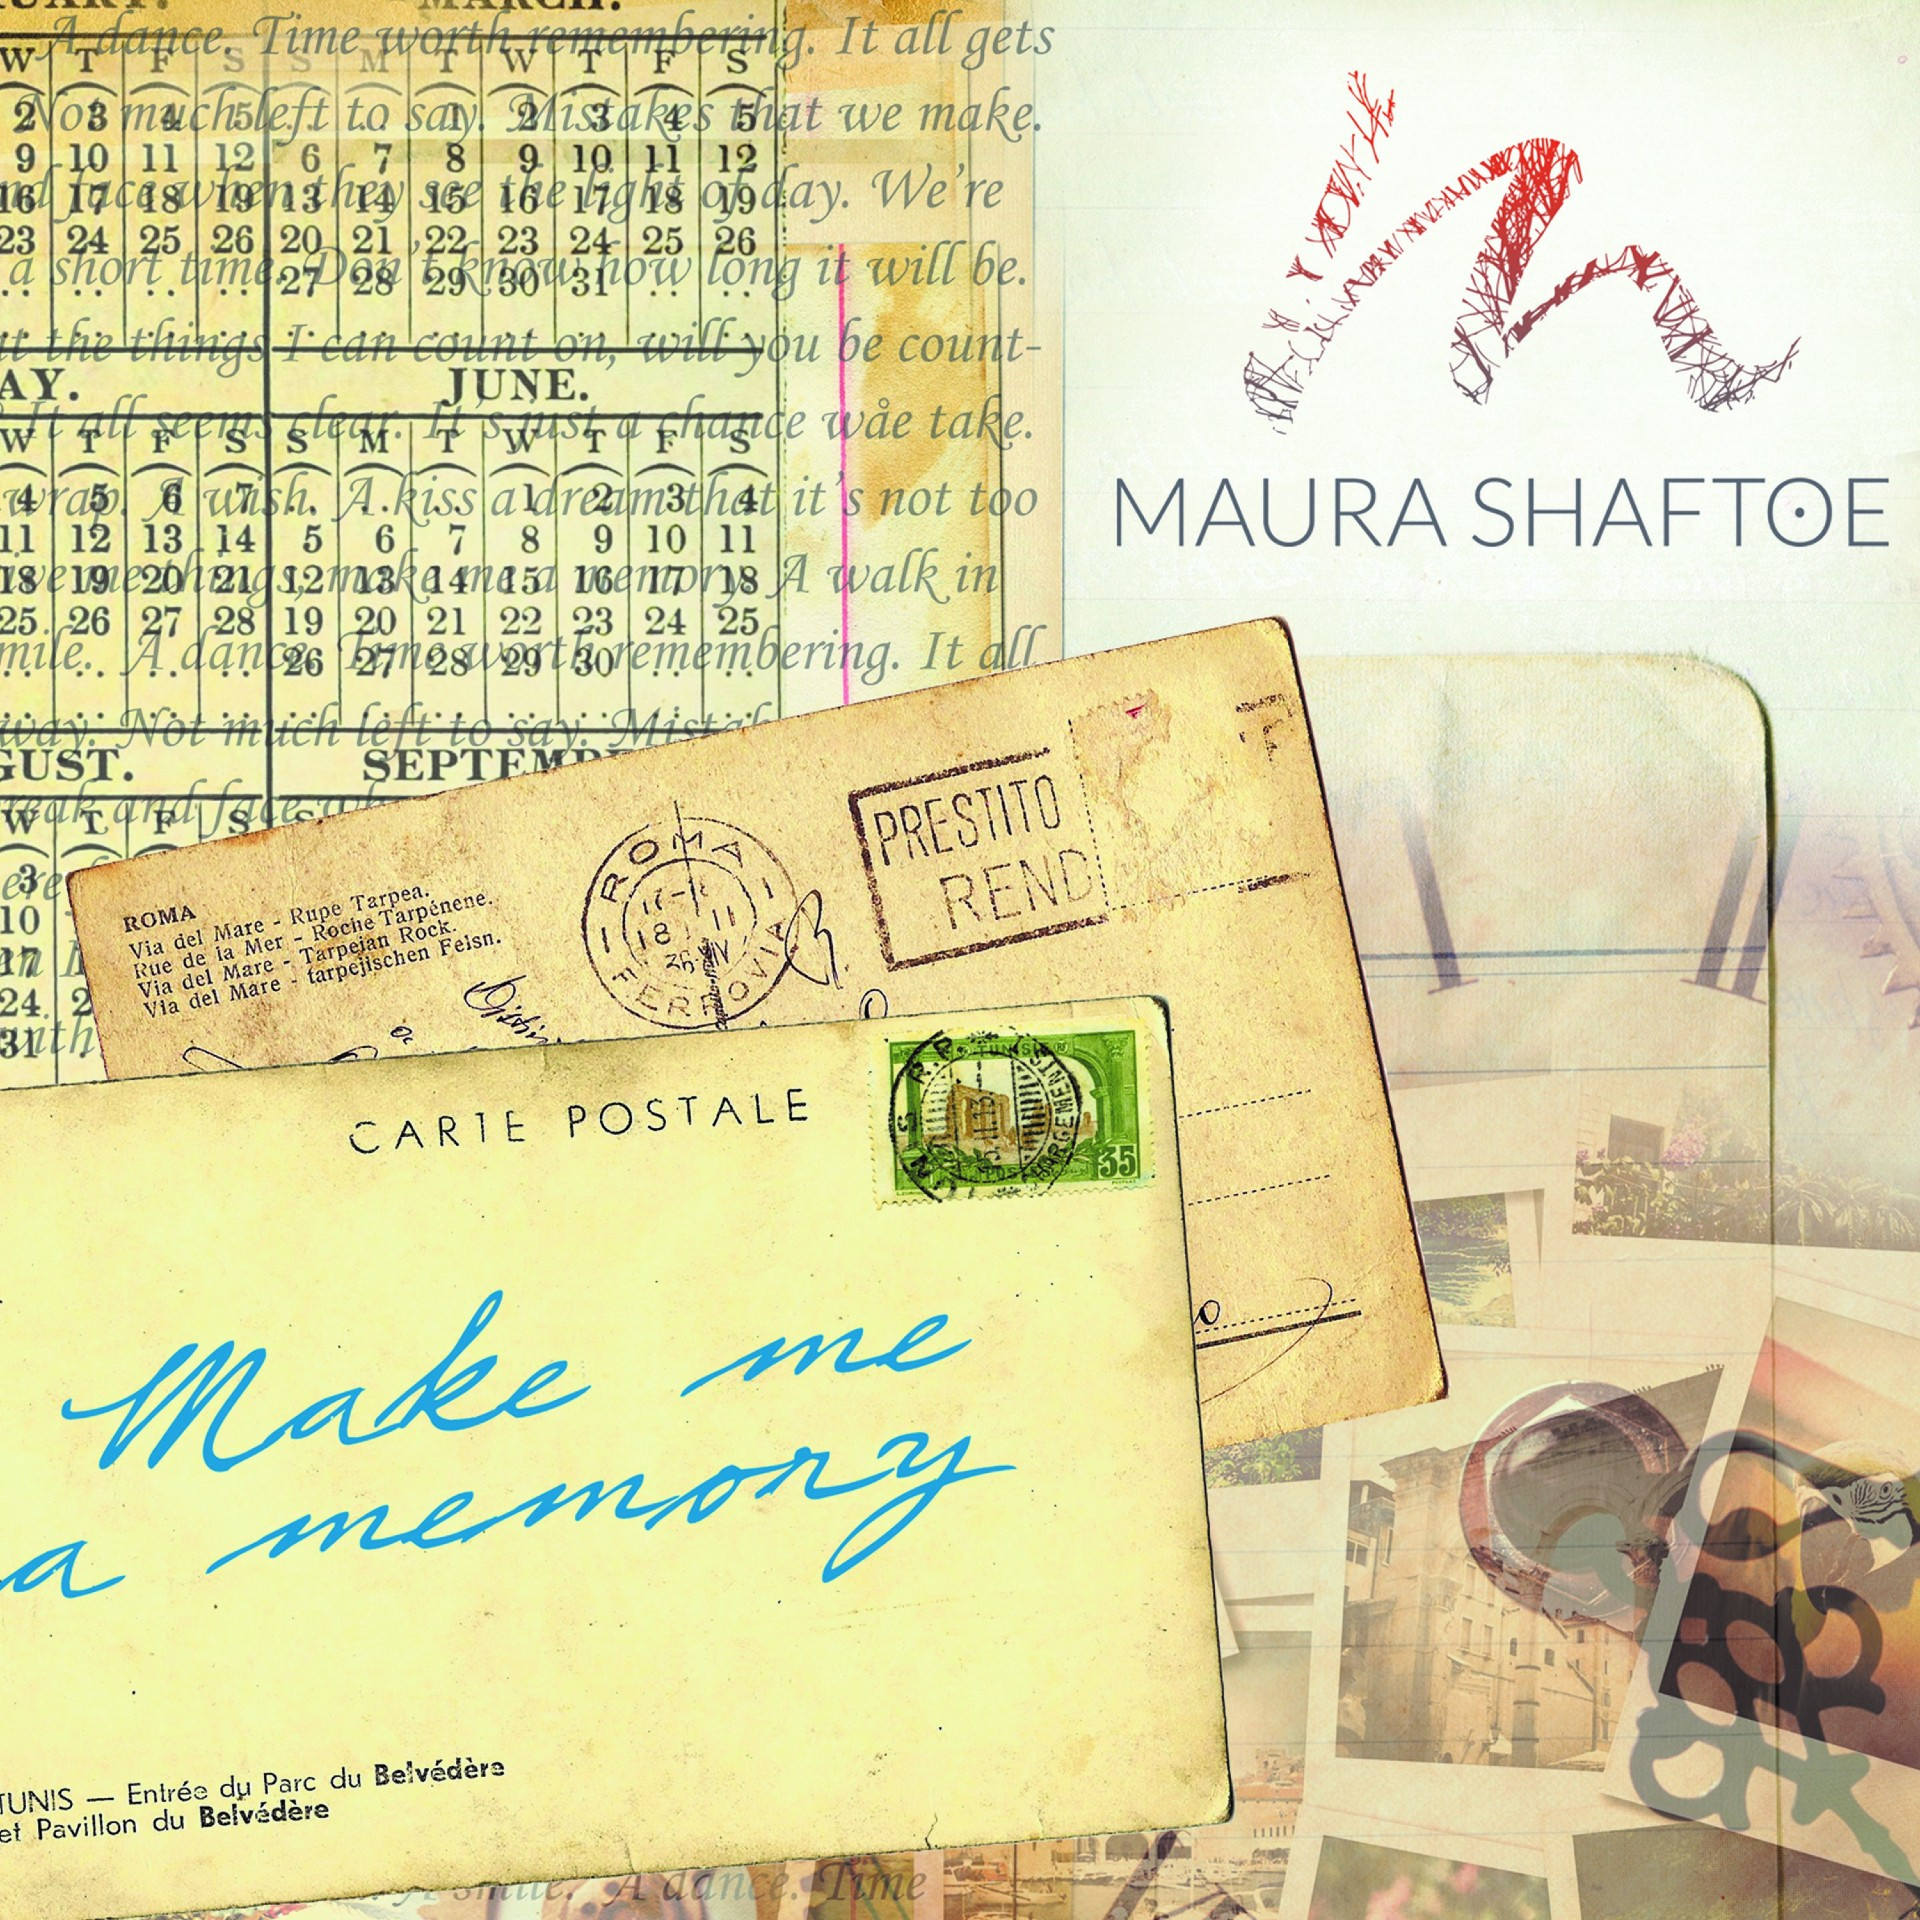 Maura Shaftoe | "Make Me A Memory"